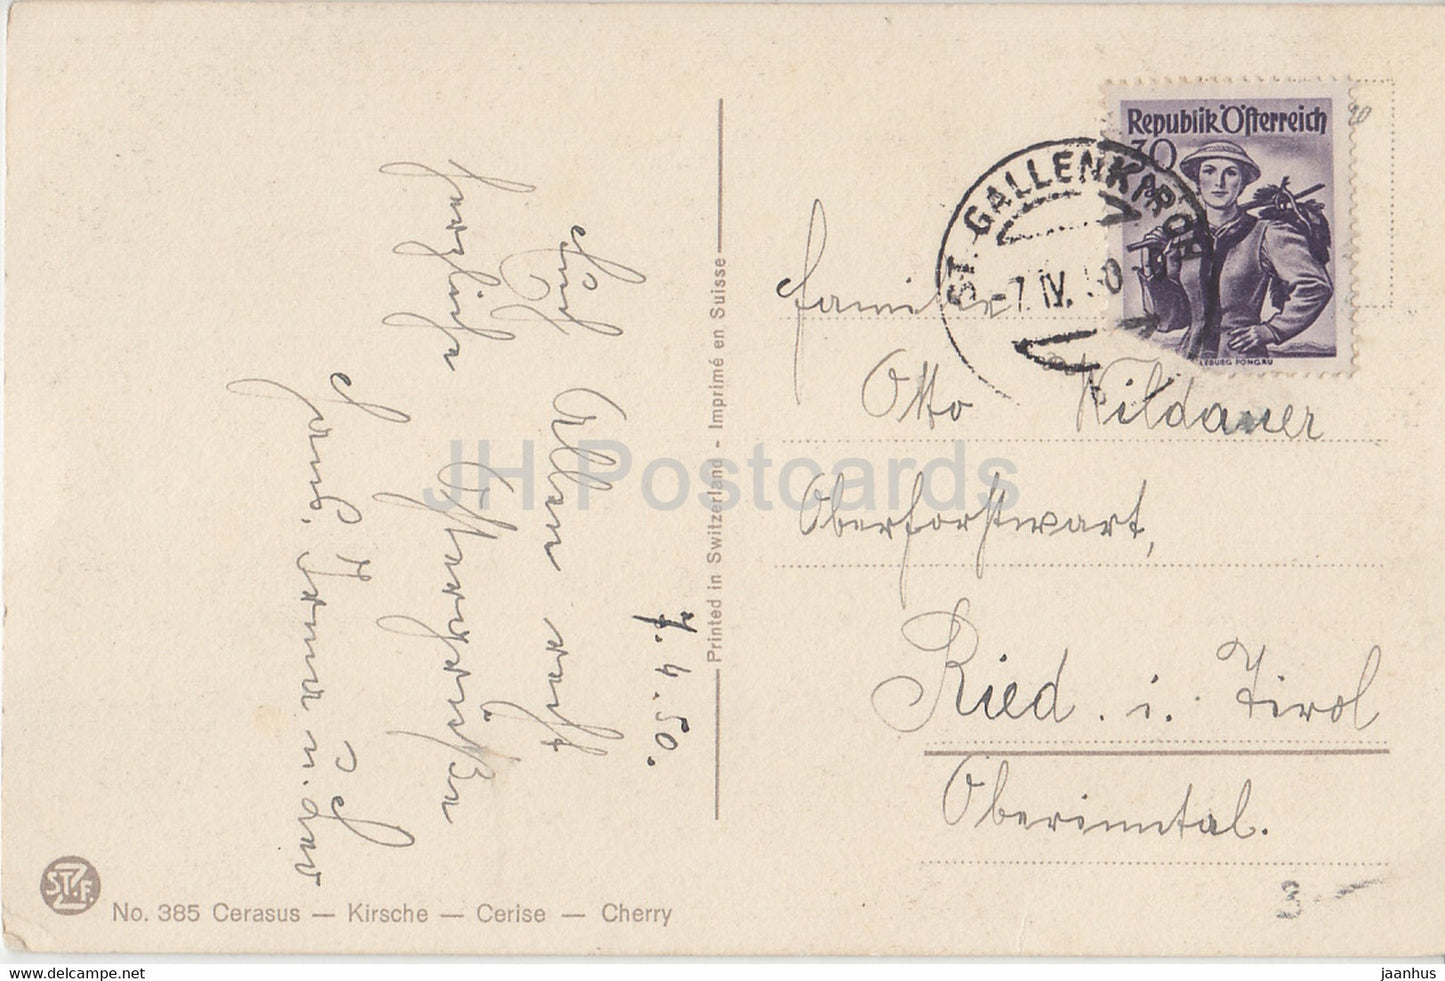 Cerasus - Kirsche - Cerise - 385 - carte postale ancienne - 1950 - Suisse - utilisé